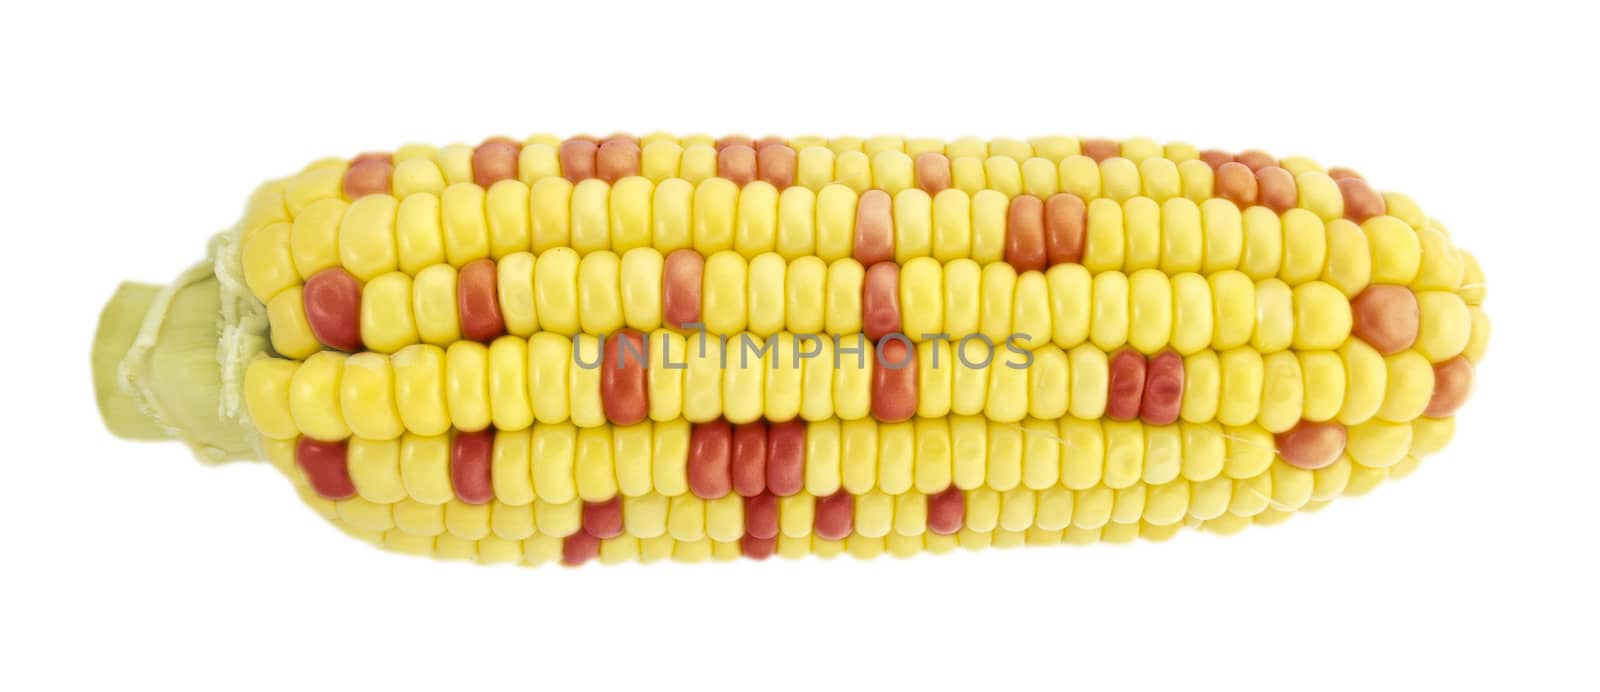 Corn by designsstock